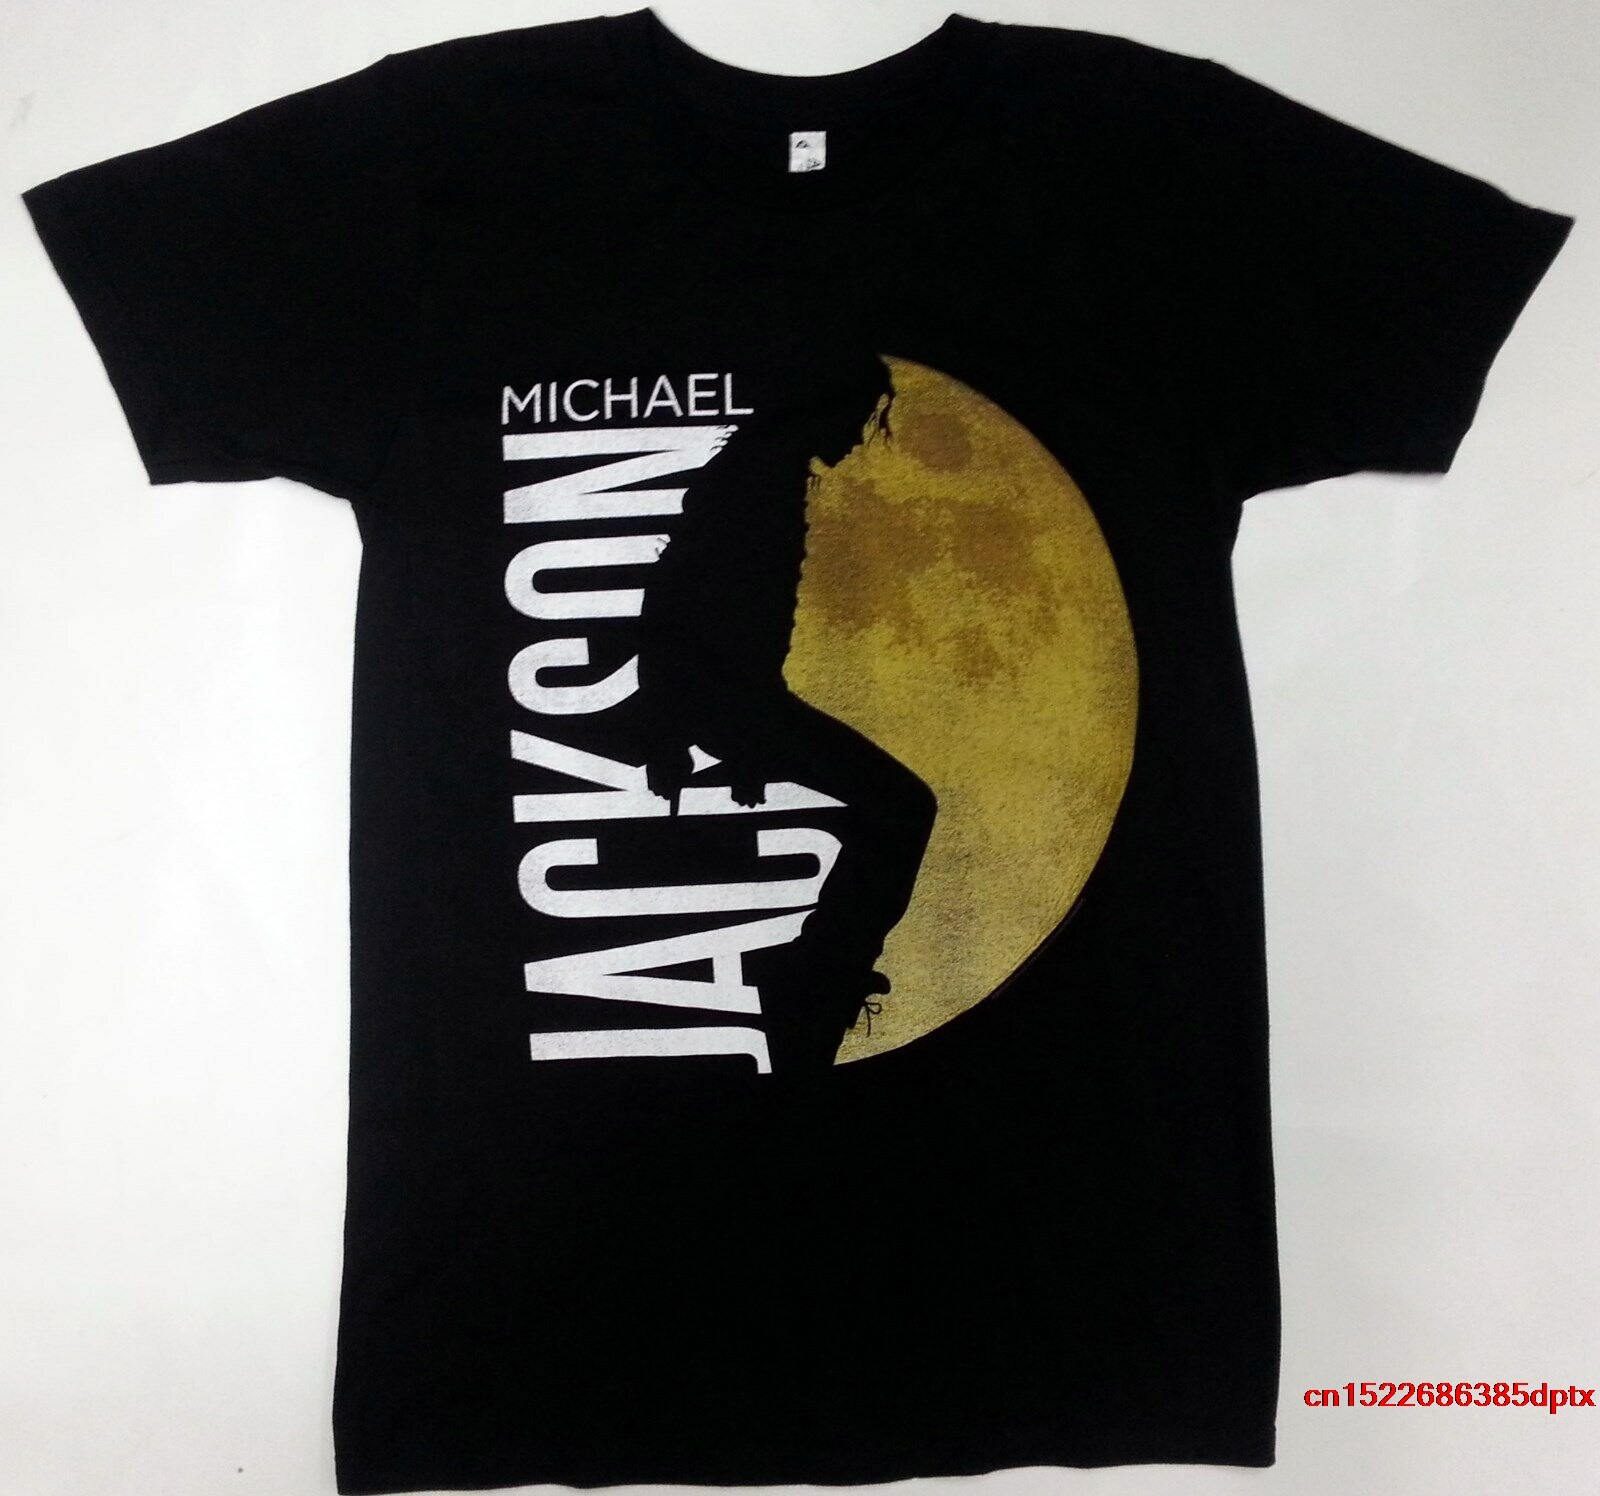 Michael Jackson MOONWALKER MOONWALKING T-Shirt NEW Licensed & -1 man's t-shirt tee Men’s Clothing cb5feb1b7314637725a2e7: army green|Black|gray|grey|navy|red|White